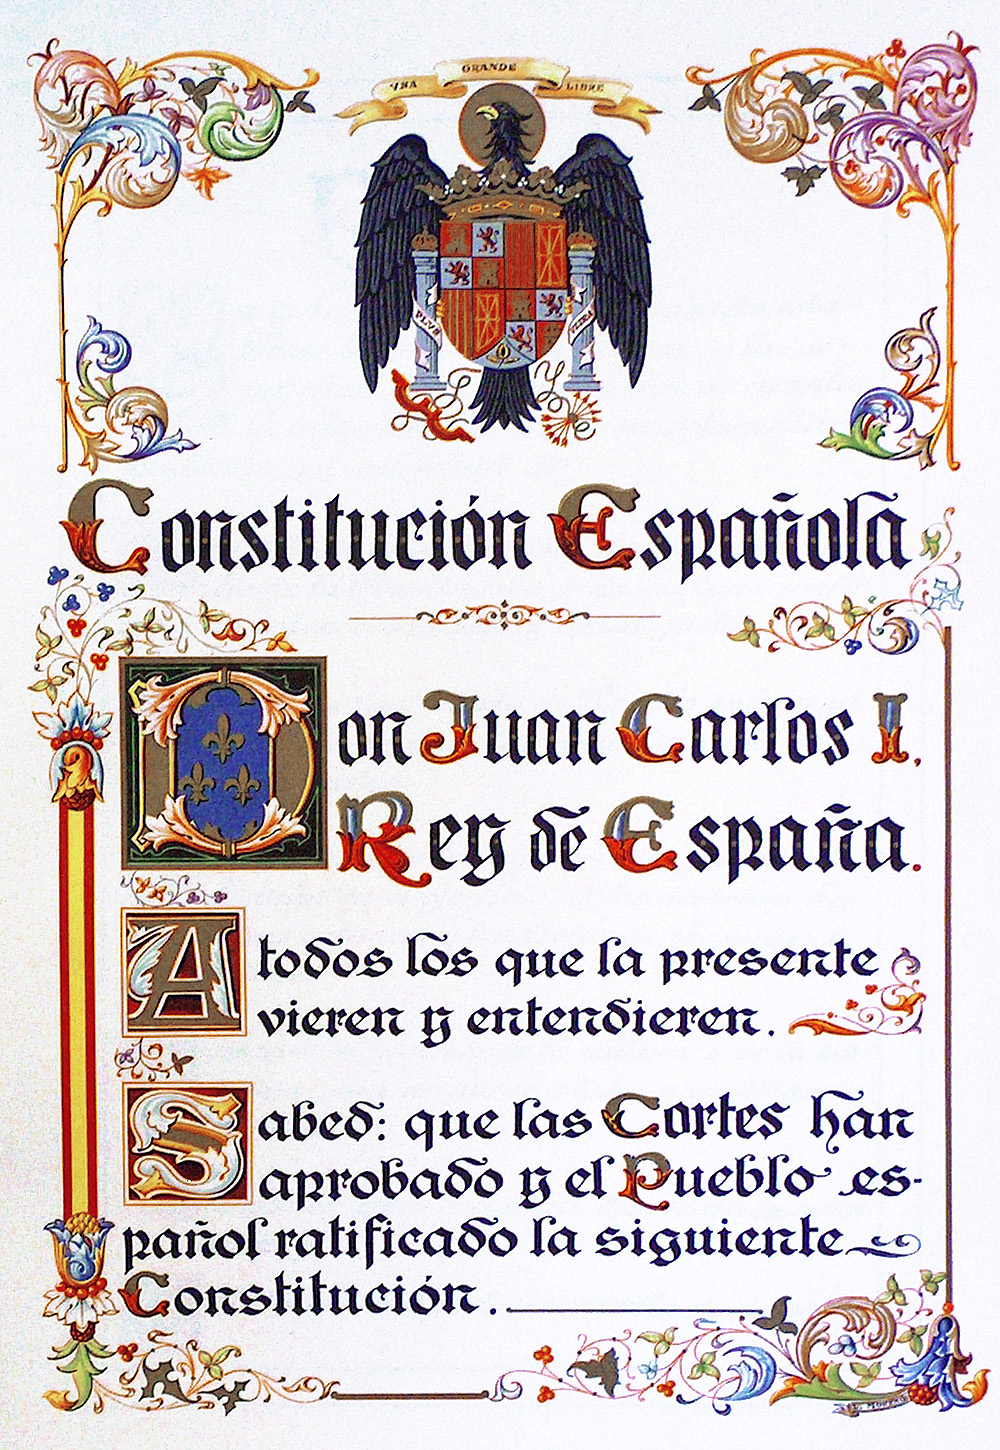 Constitución Española - 1978